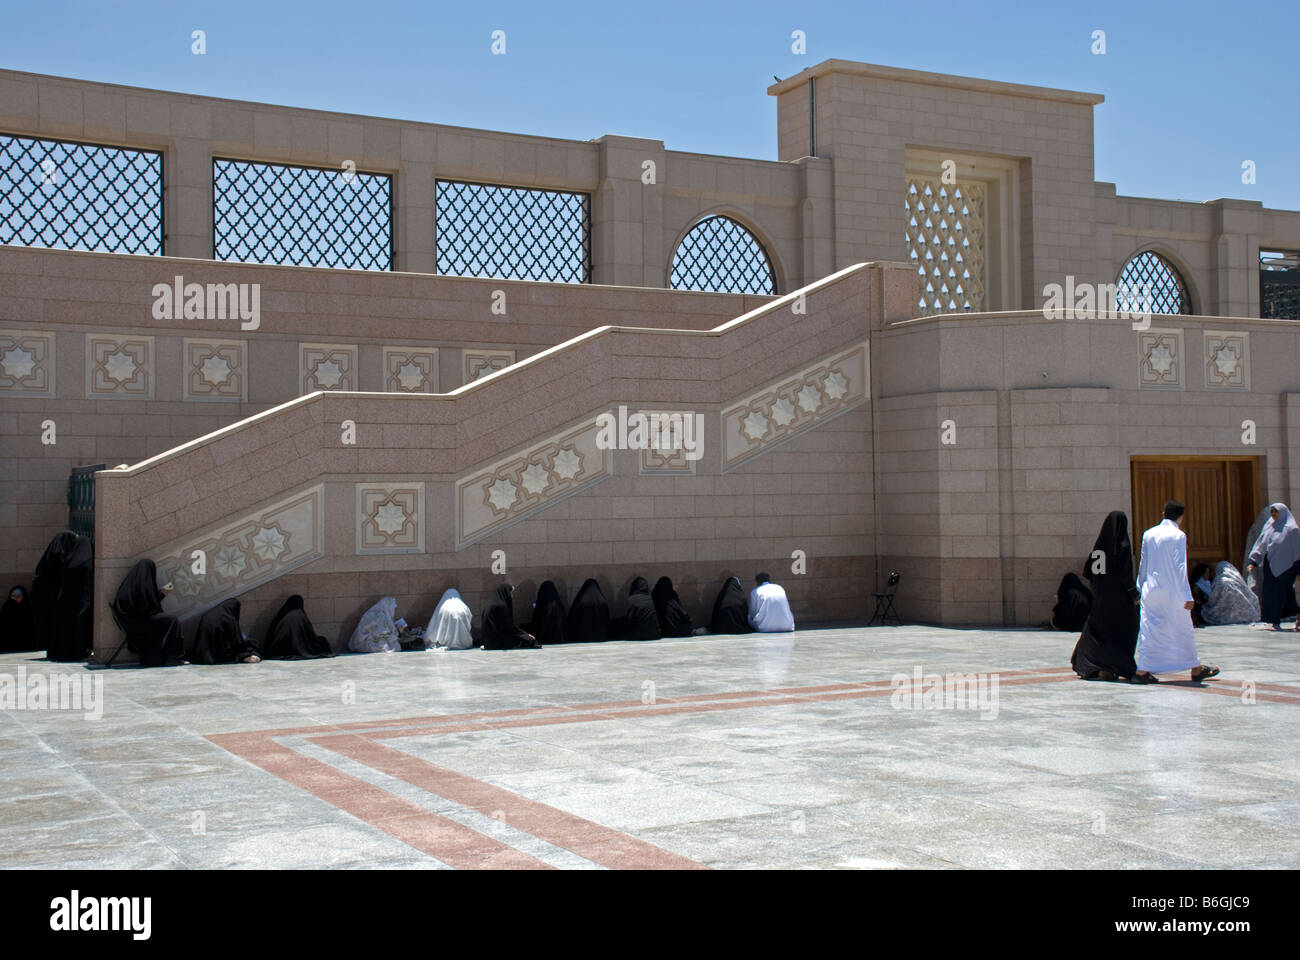 Woman praying in shade in the walls of Jannat Al Baqi Madinah Saudi Arabia Stock Photo